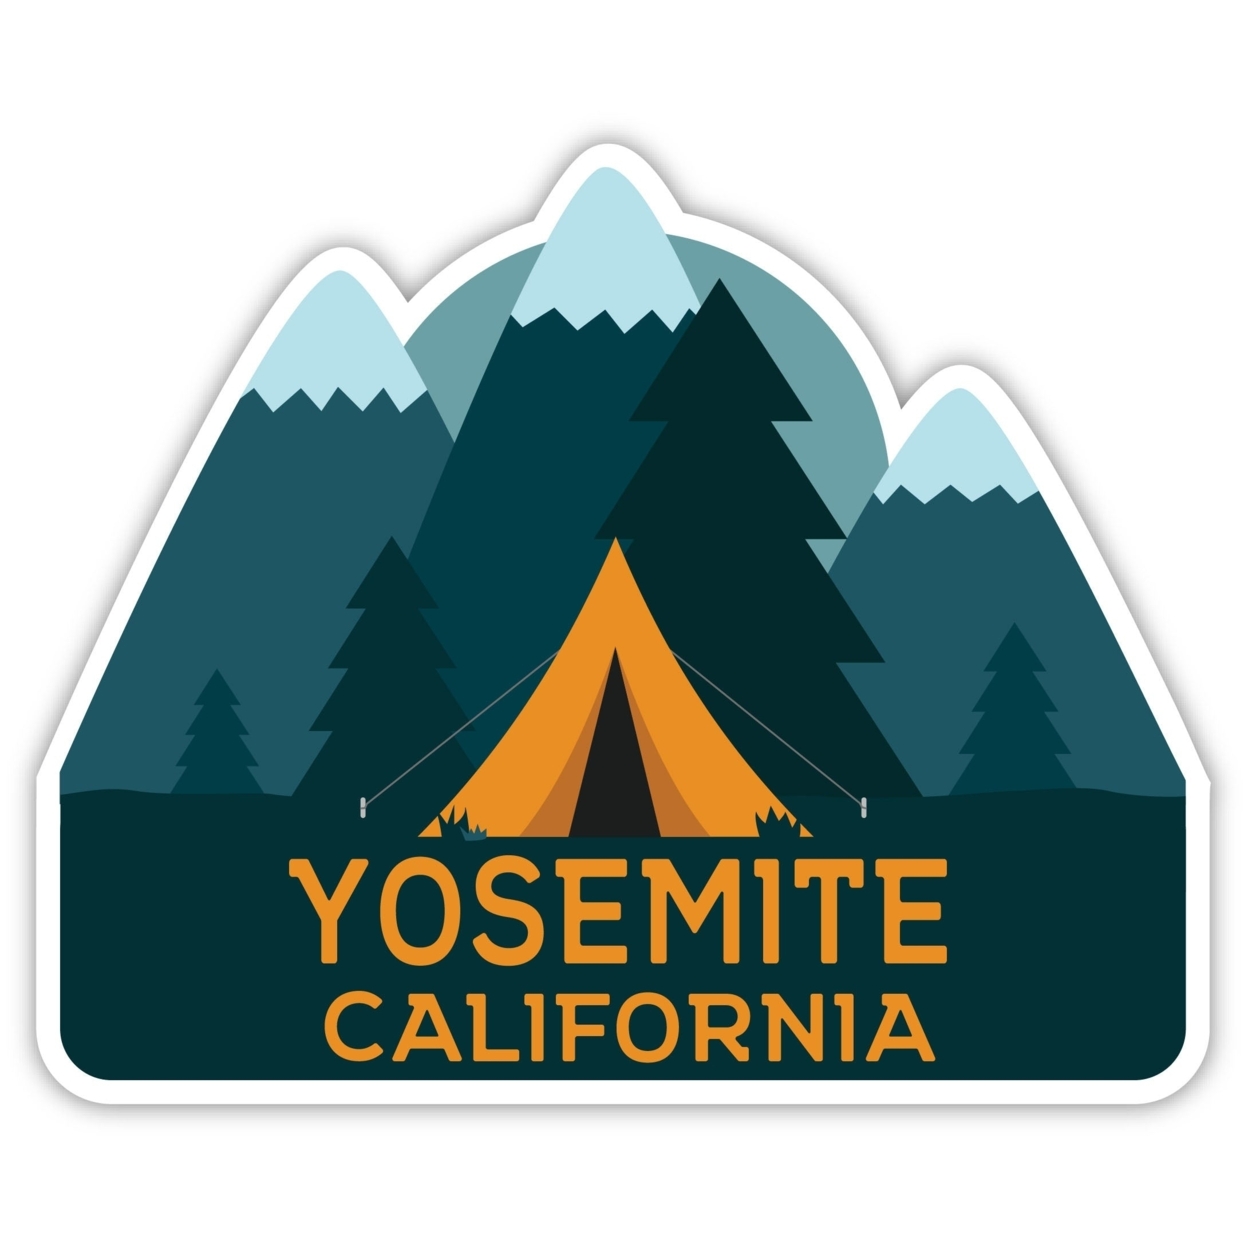 Yosemite California Souvenir Decorative Stickers (Choose Theme And Size) - Single Unit, 2-Inch, Adventures Awaits